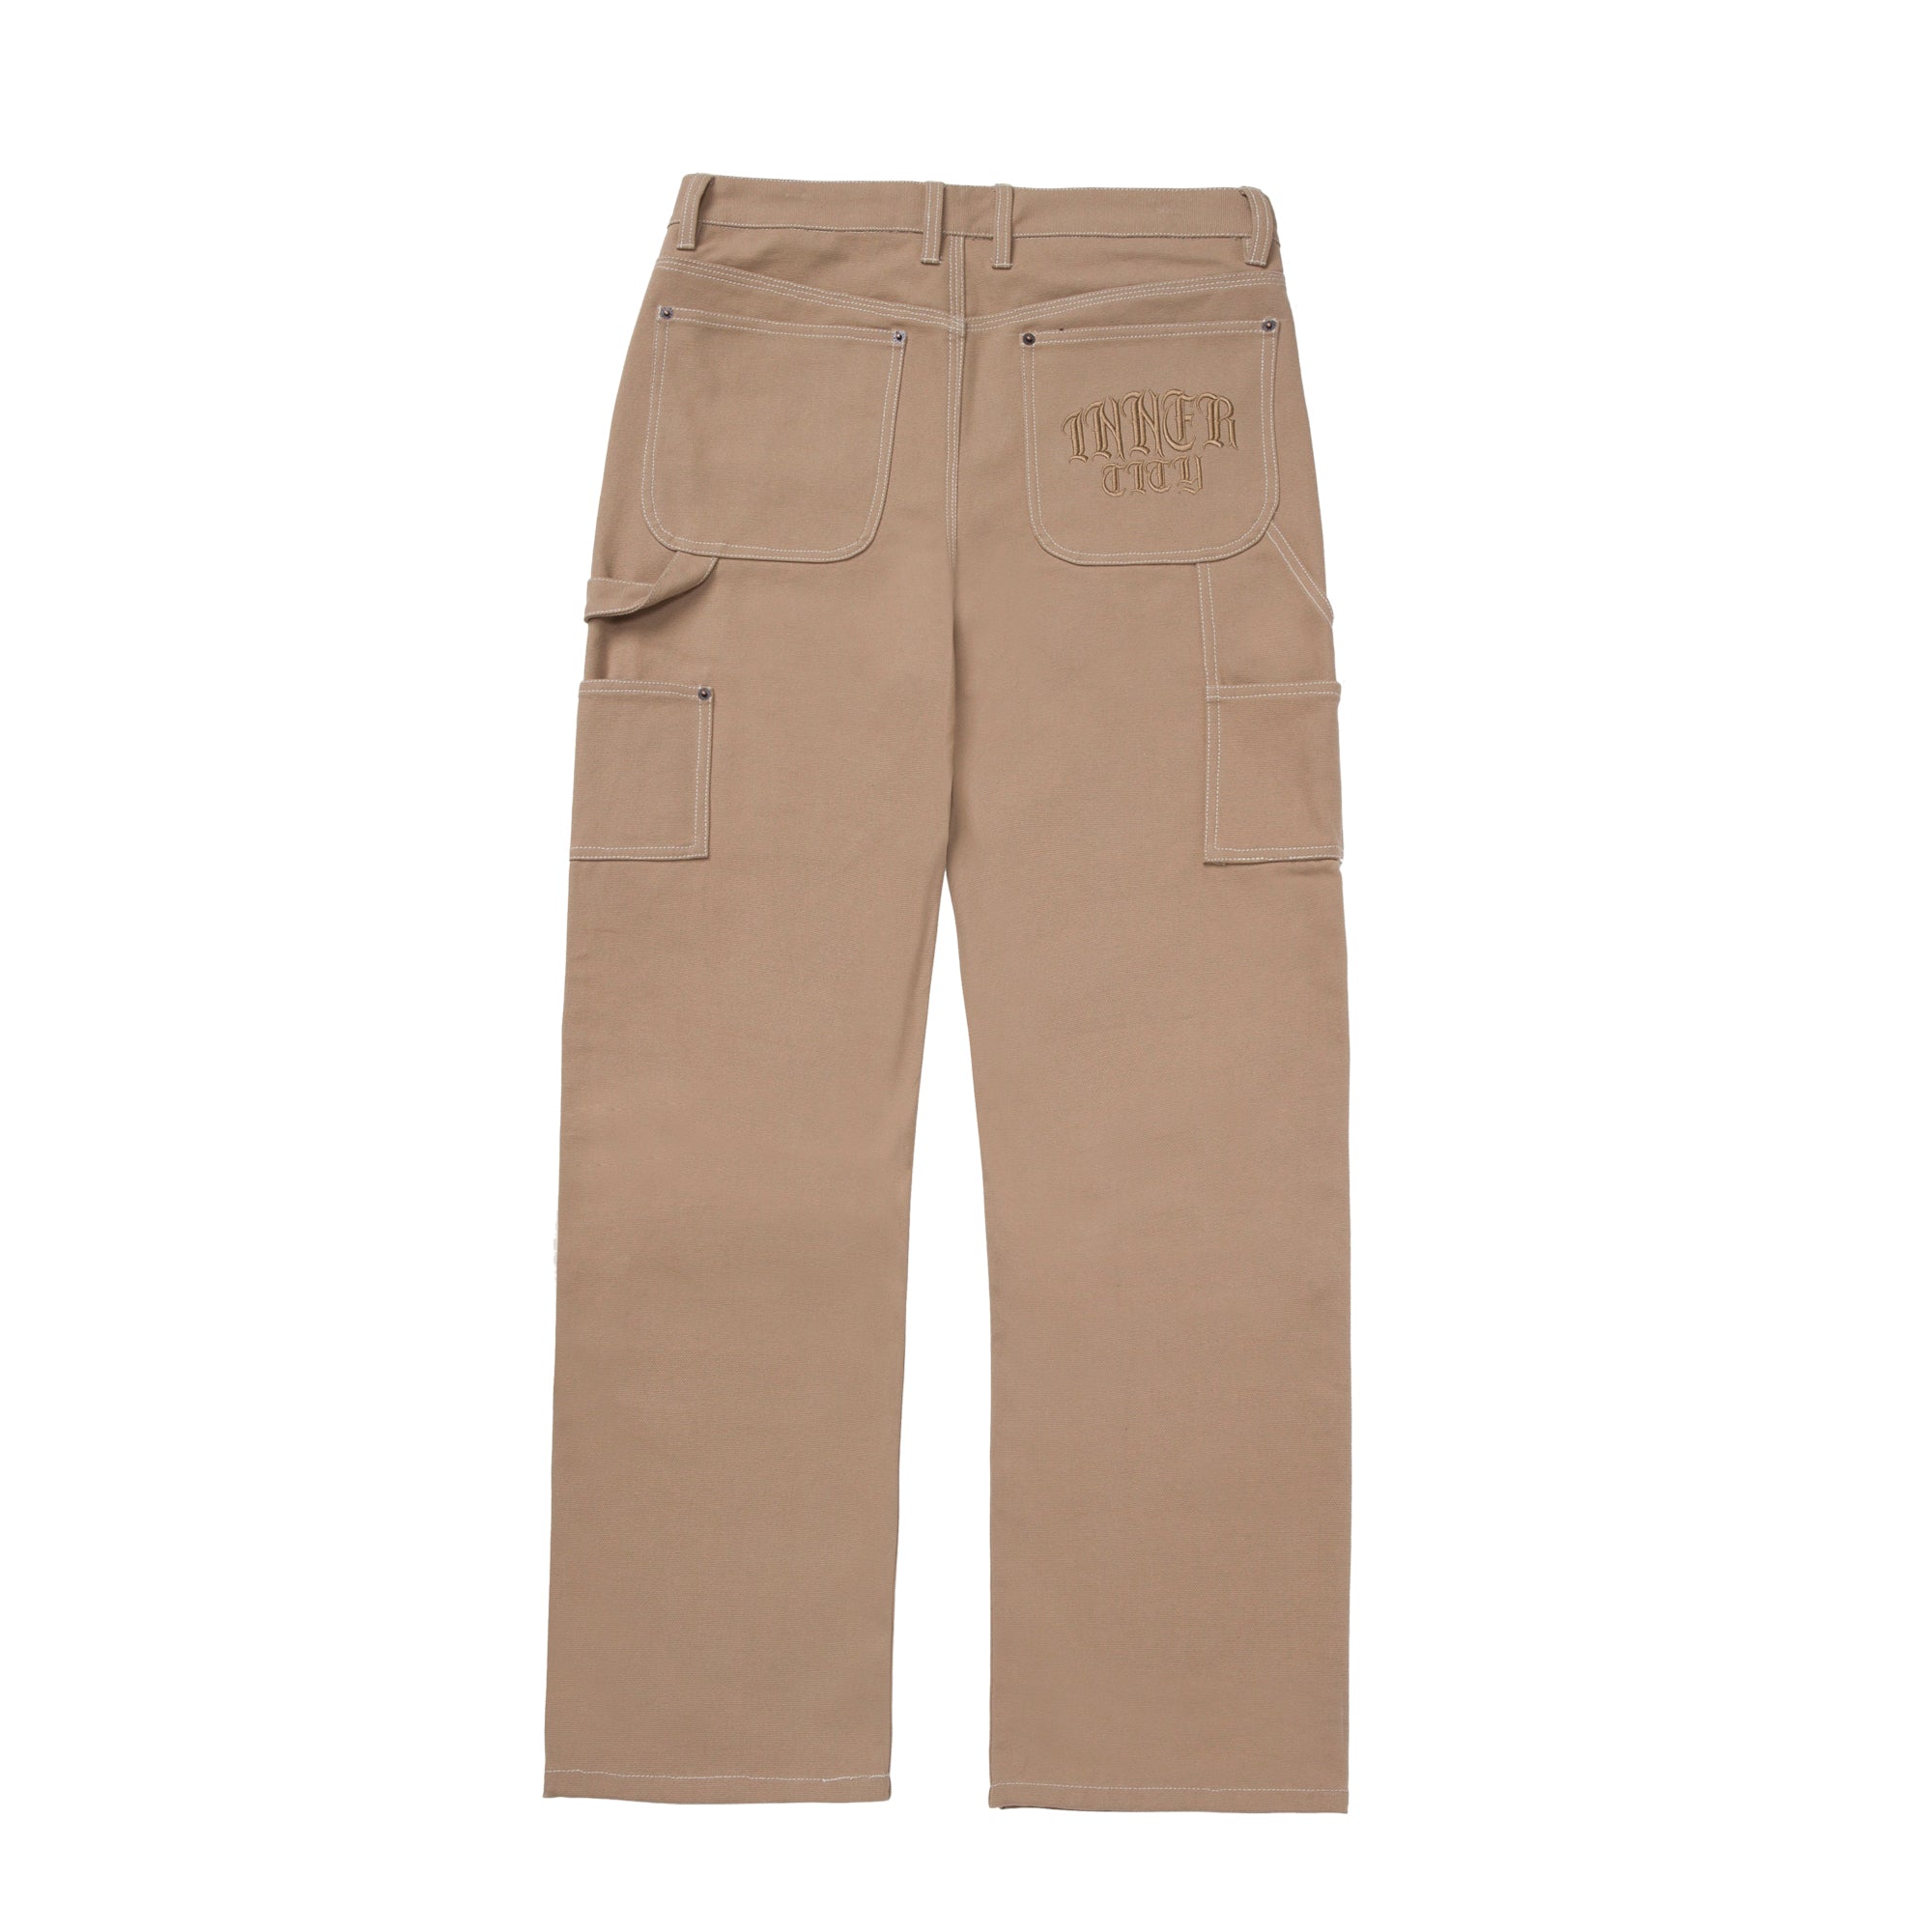 Light brown silk velvet pants by Label Priya Chaudhary | The Secret Label